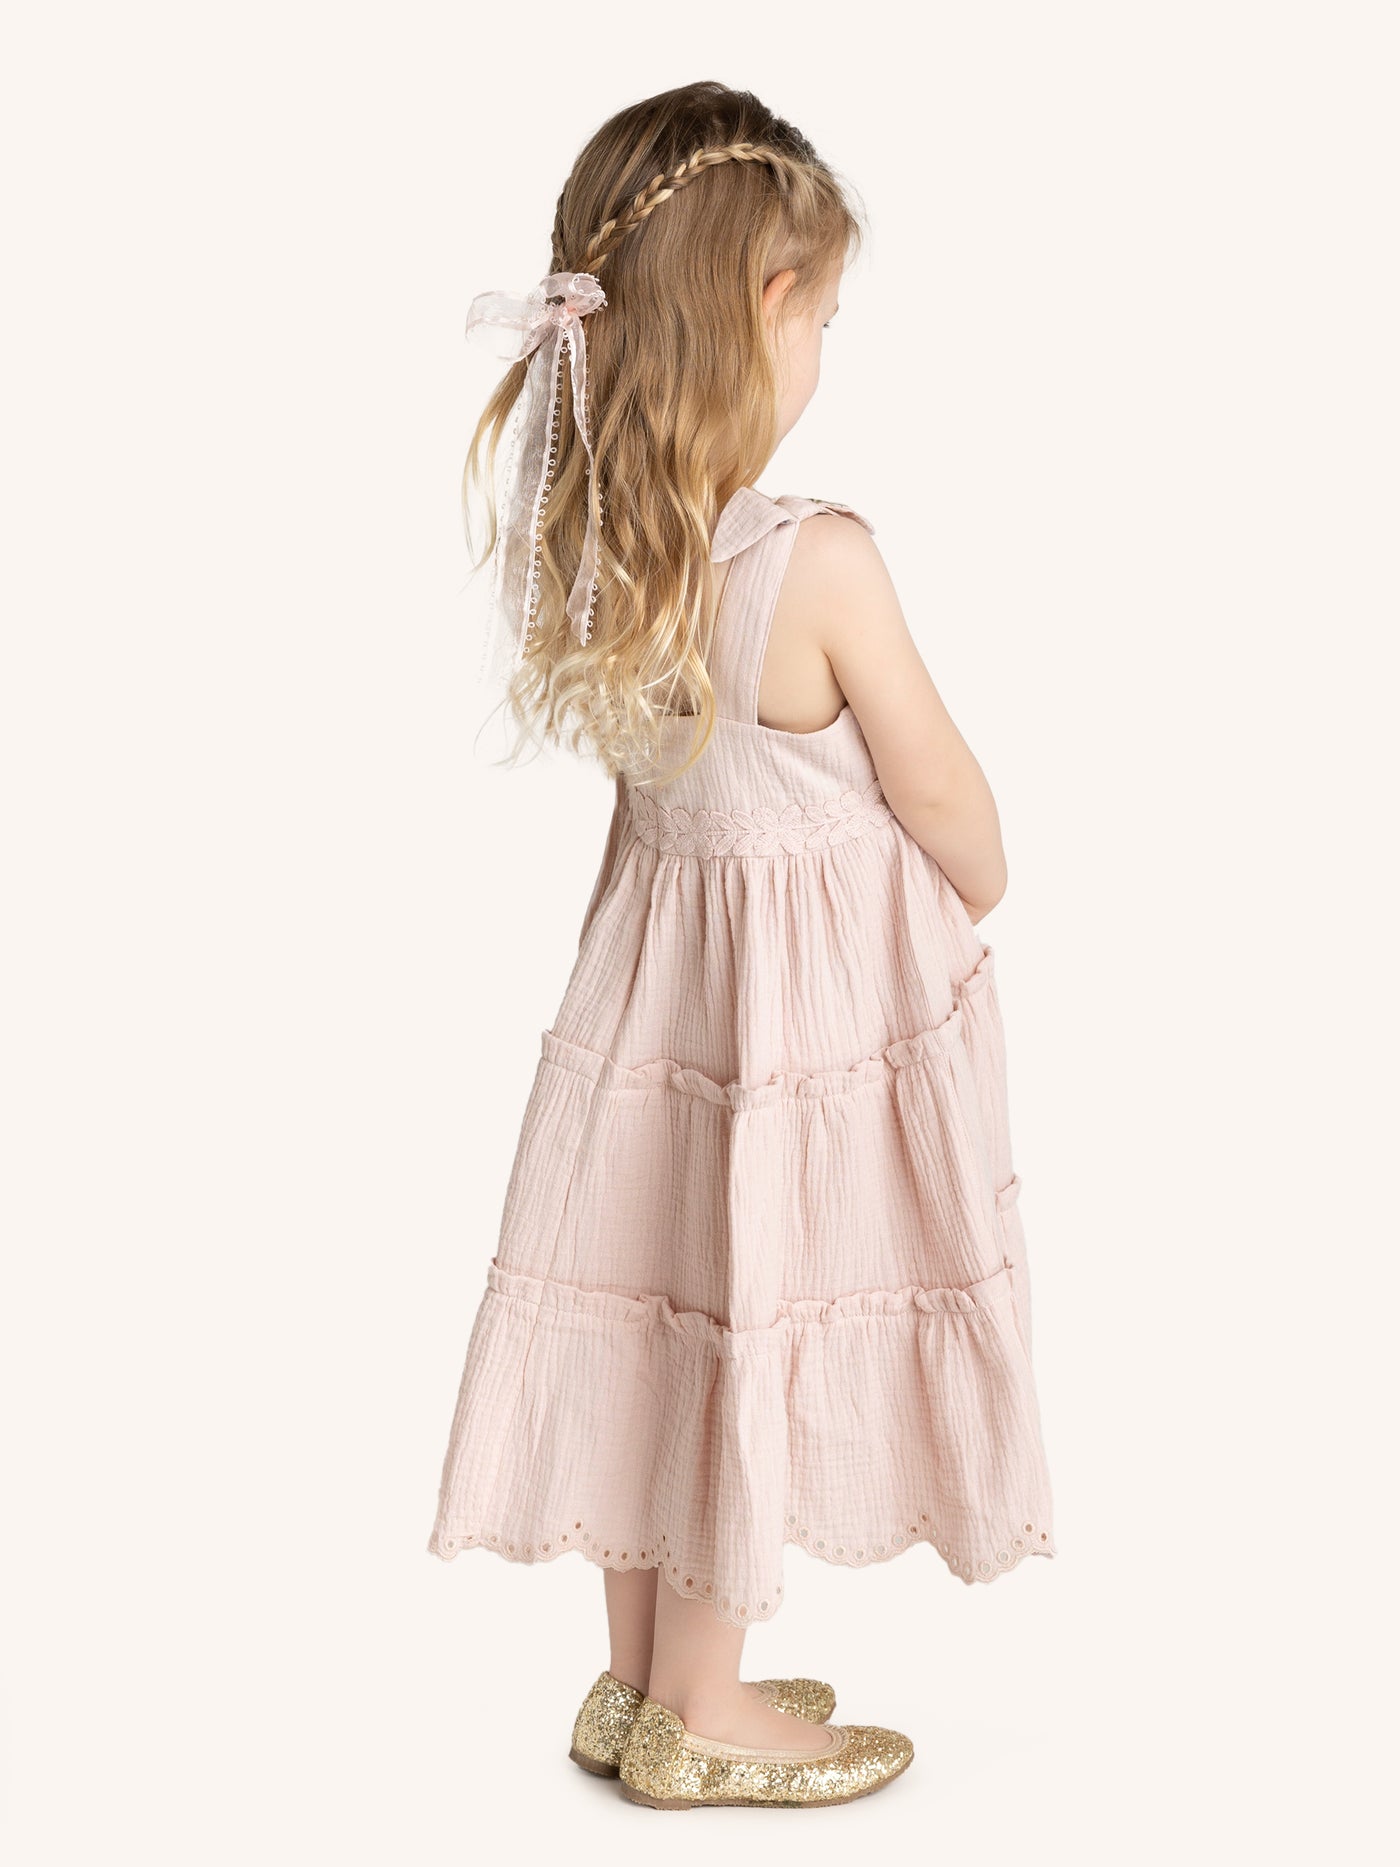 Sleeveless Dress - Soft Blush